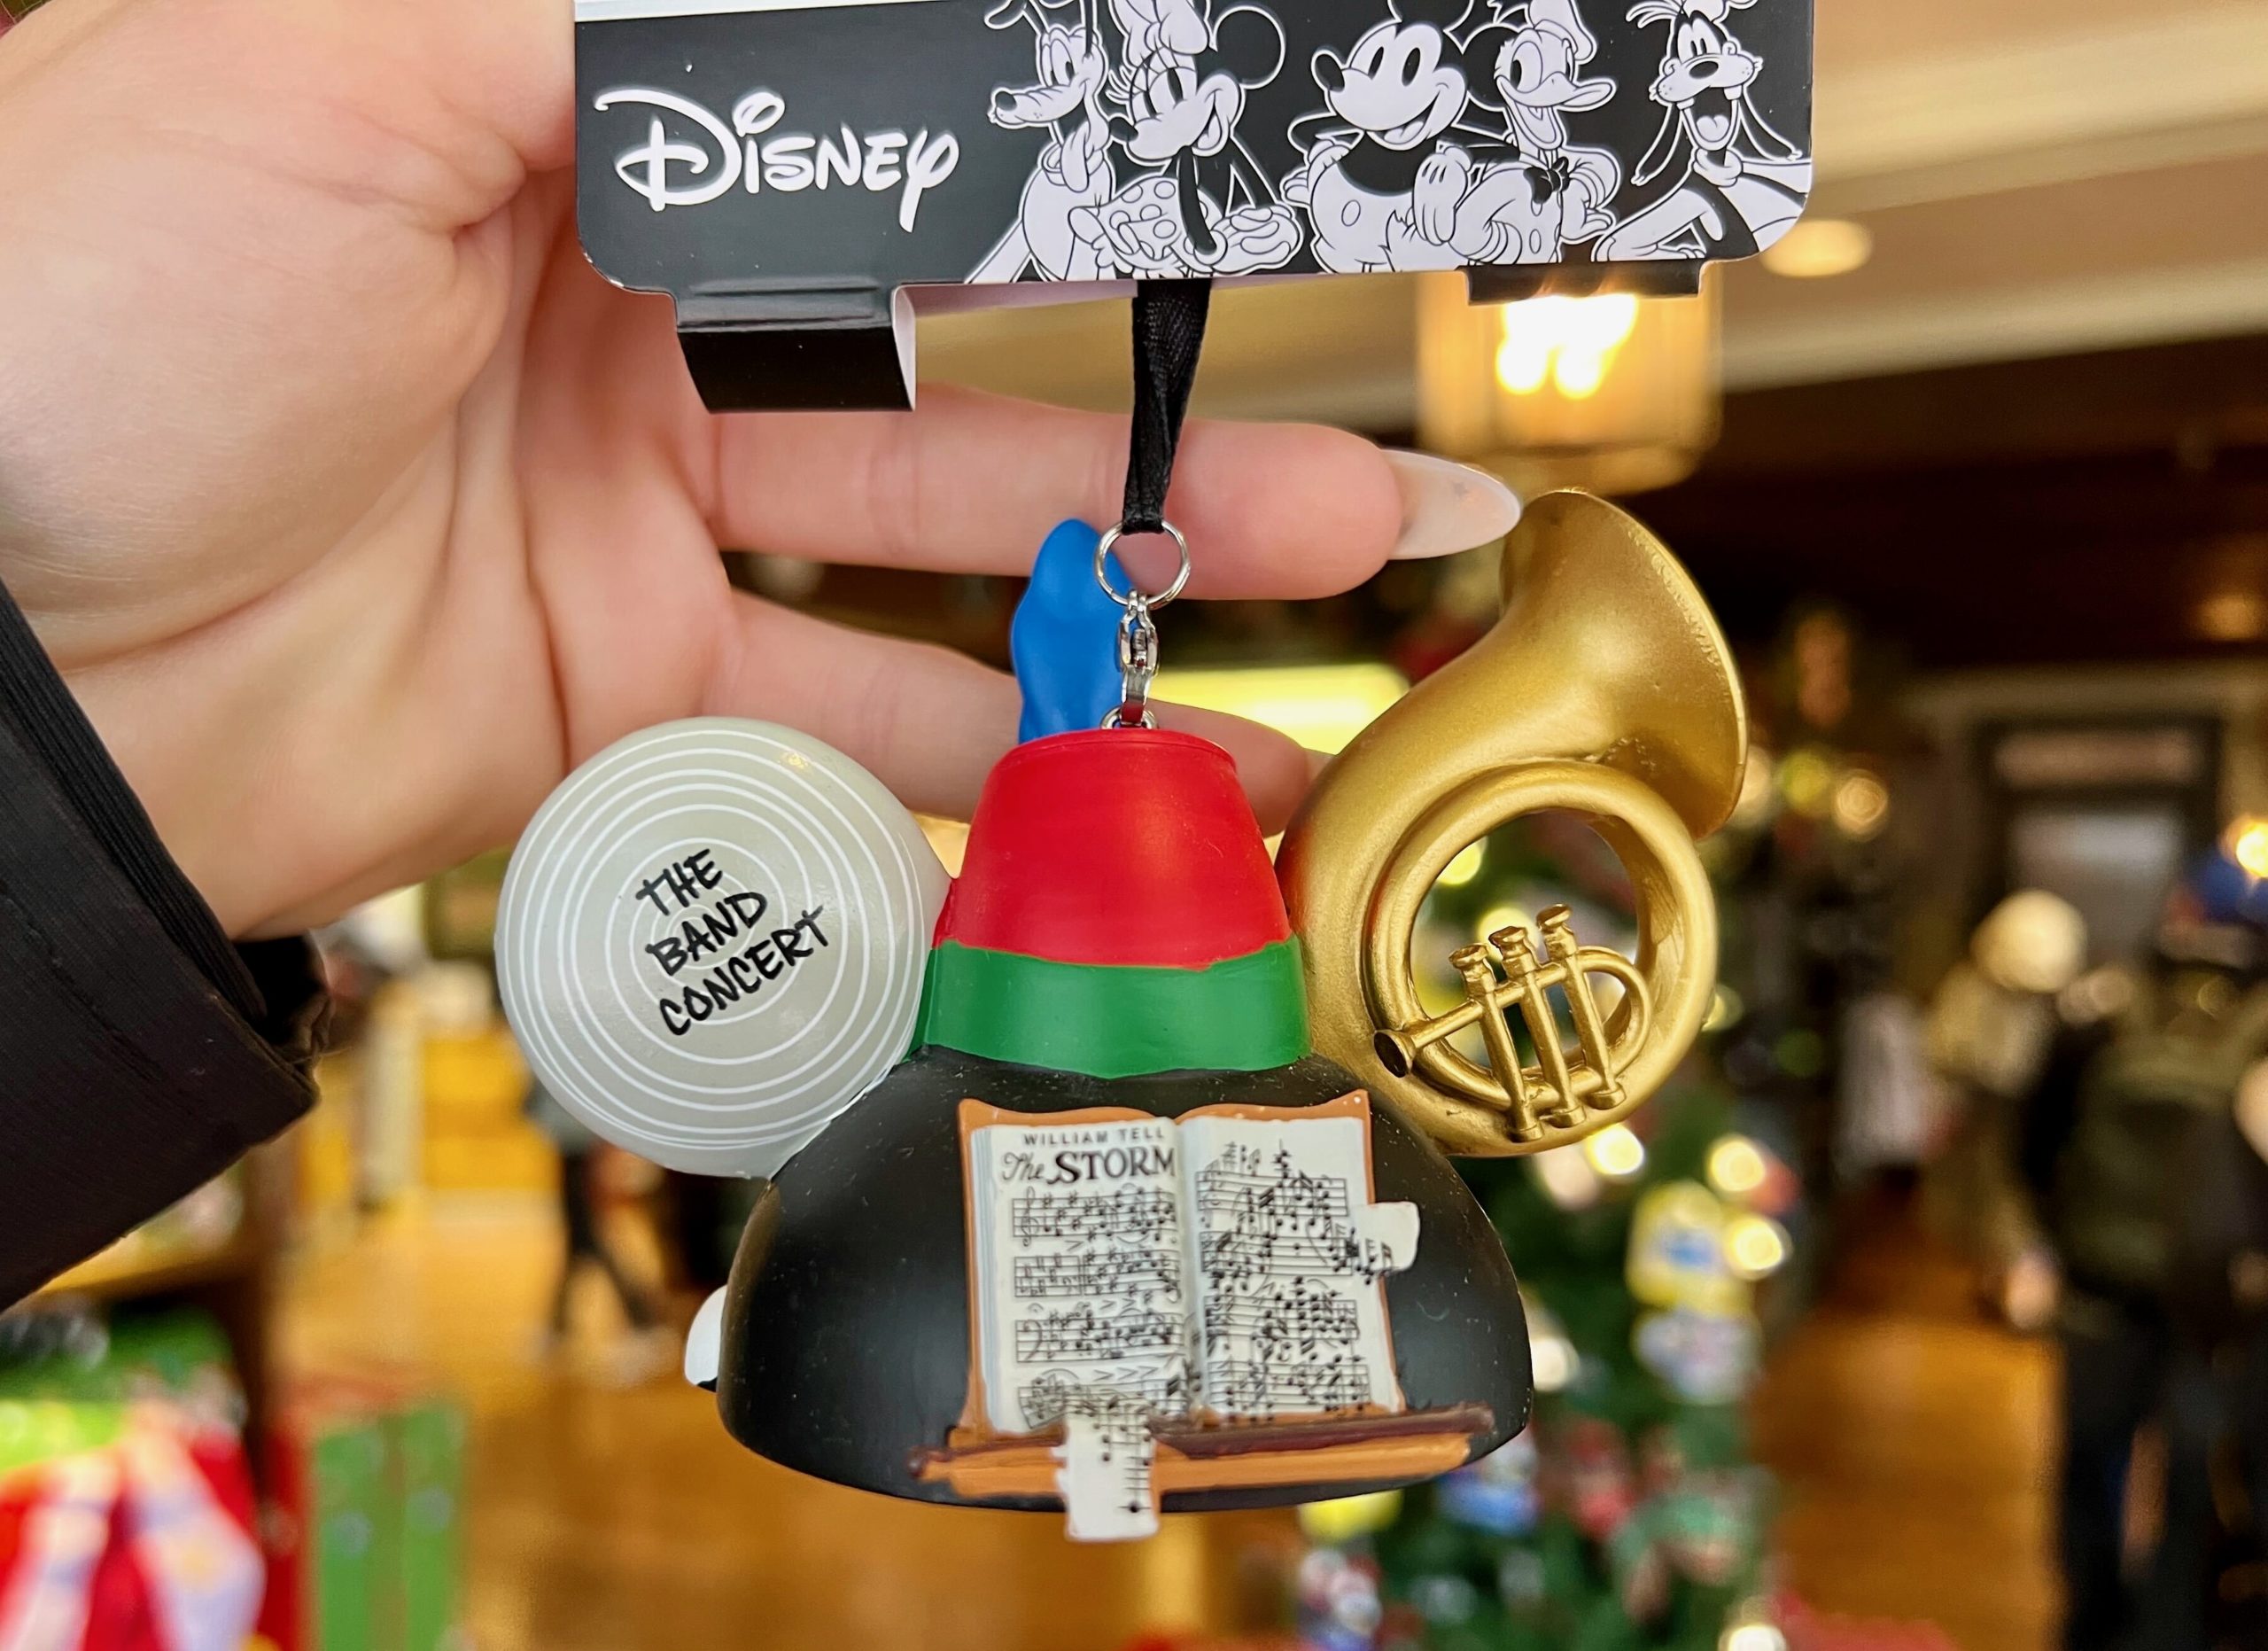 The Tree-mendous Story Behind Disney's Sketchbook Ornaments - D23